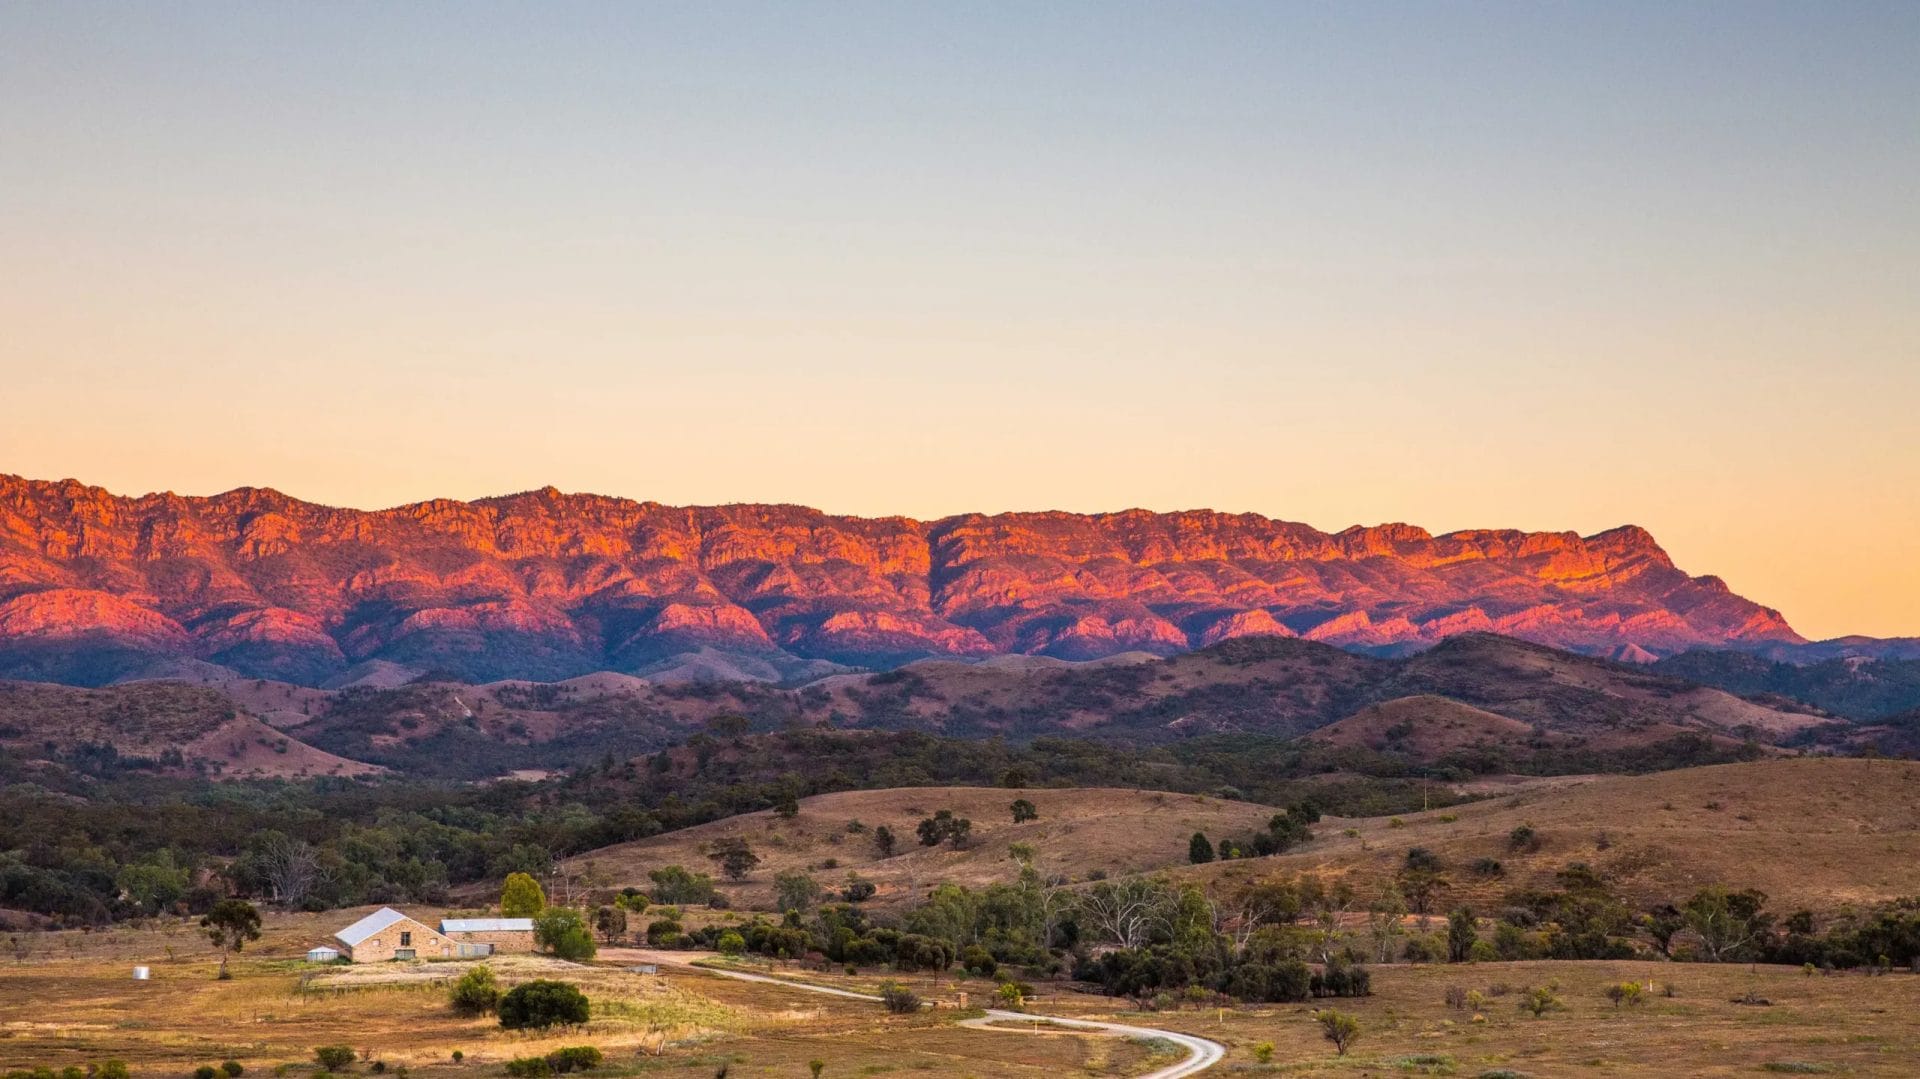 Landscape shot of Arkaba Homestead in the Flinders Ranges at dusk with the mountain range lit up in orange hues